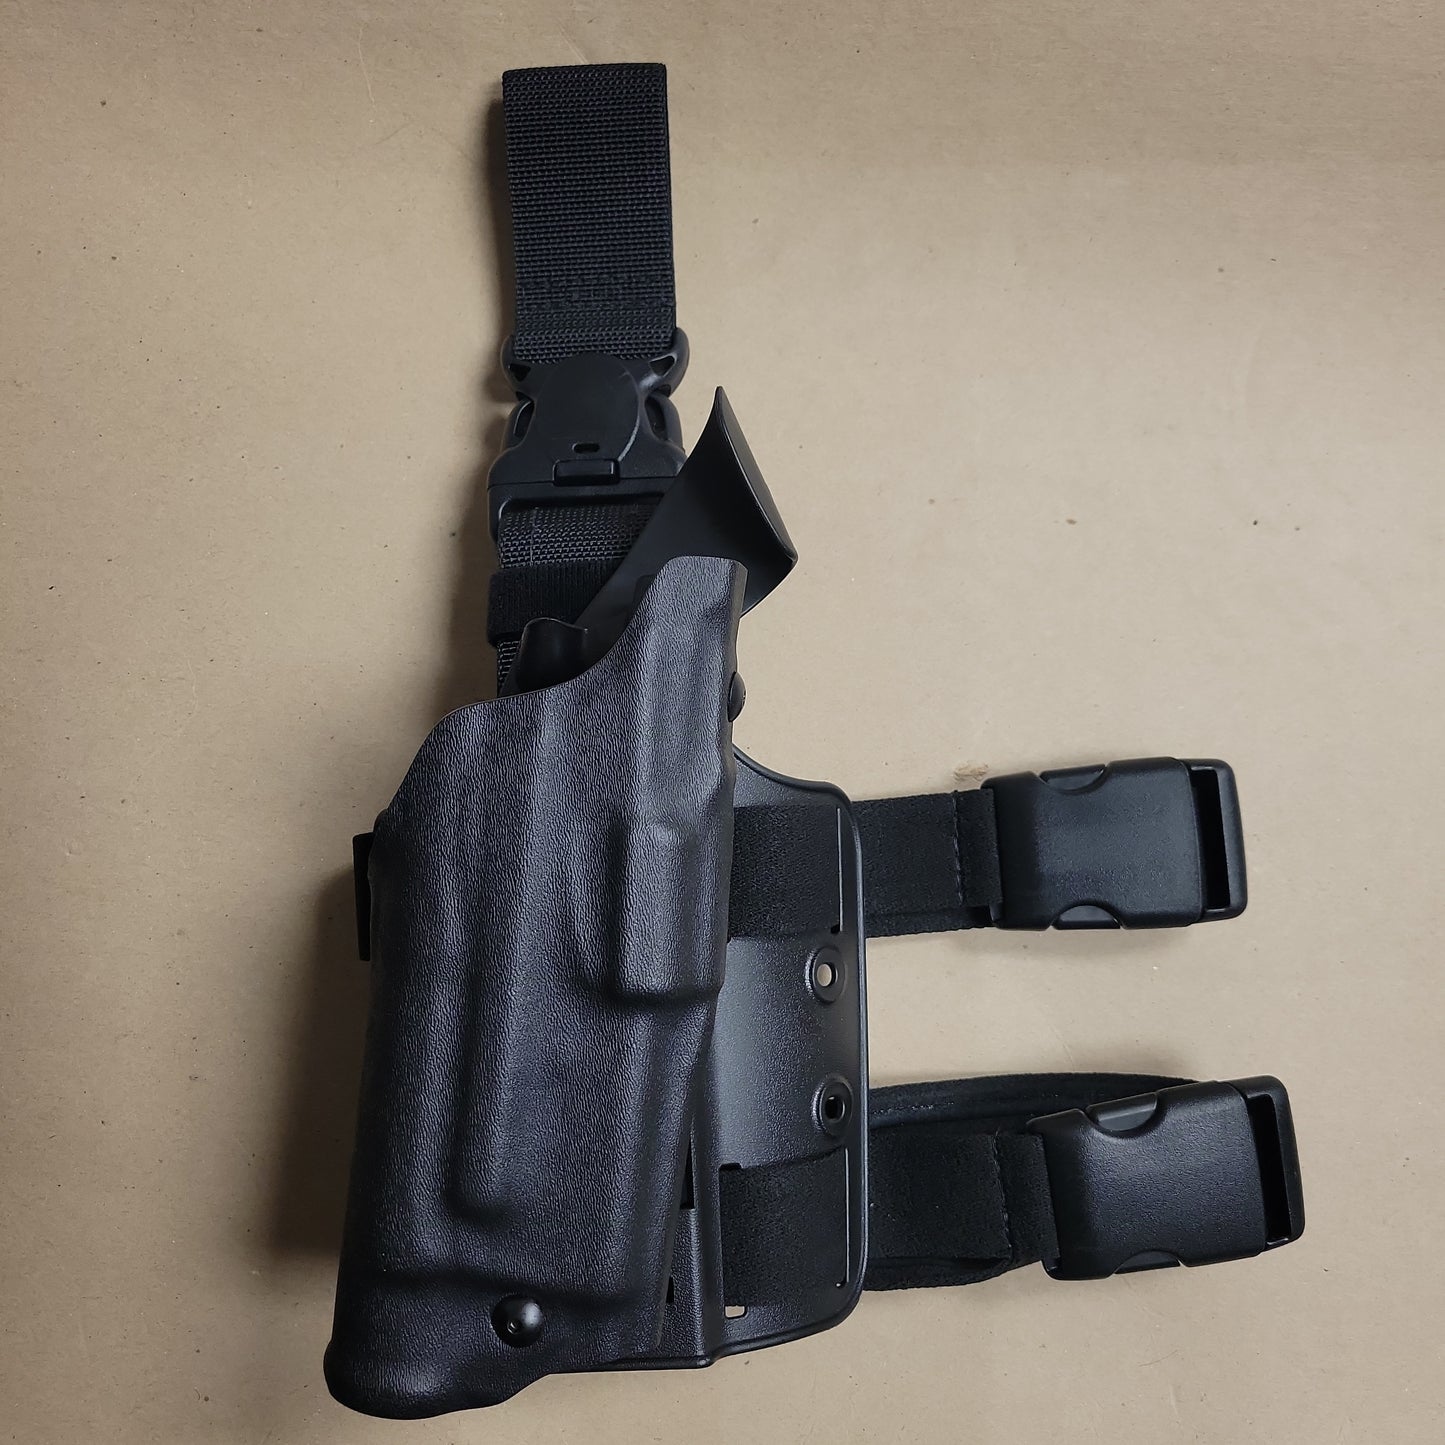 Safariland Holster Tactical STX RH for Glock 19/45 Gen3-5/G23 Gen3-4 w/TLR1 6355-28325-131